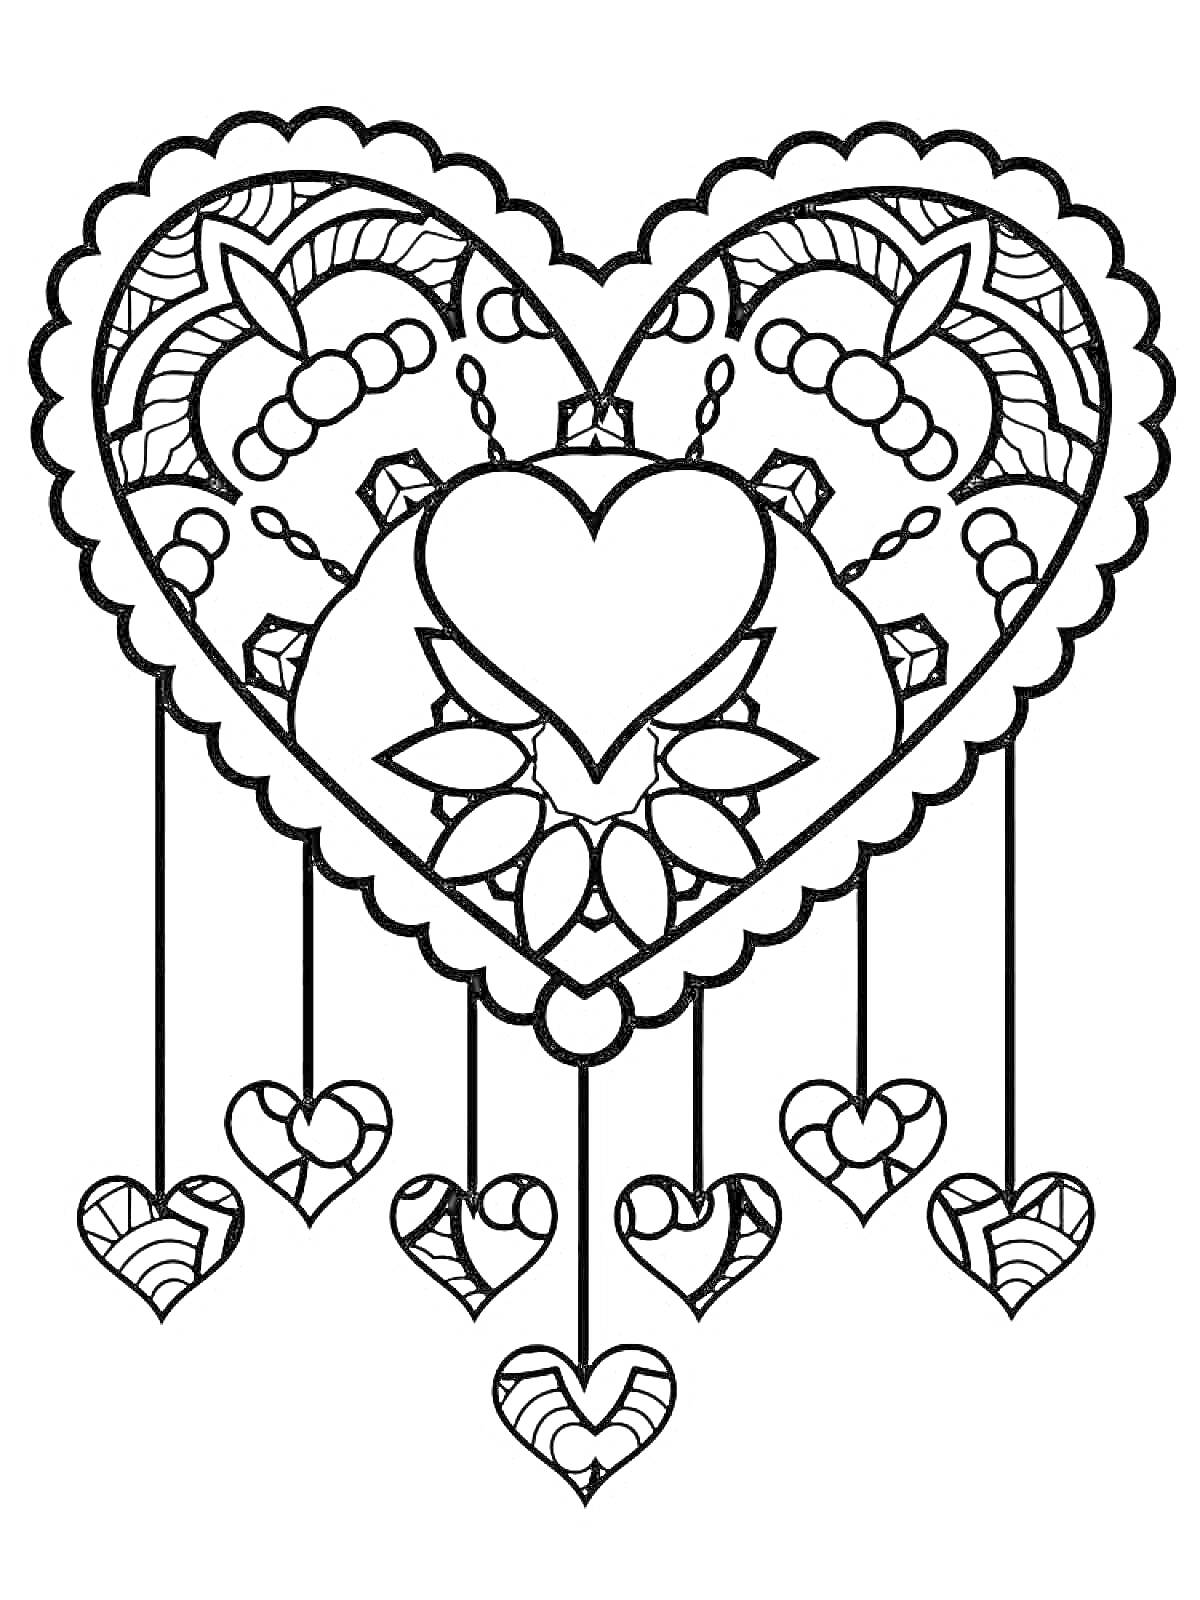 Раскраска Сердечко с узорами и подвесками в виде сердечек